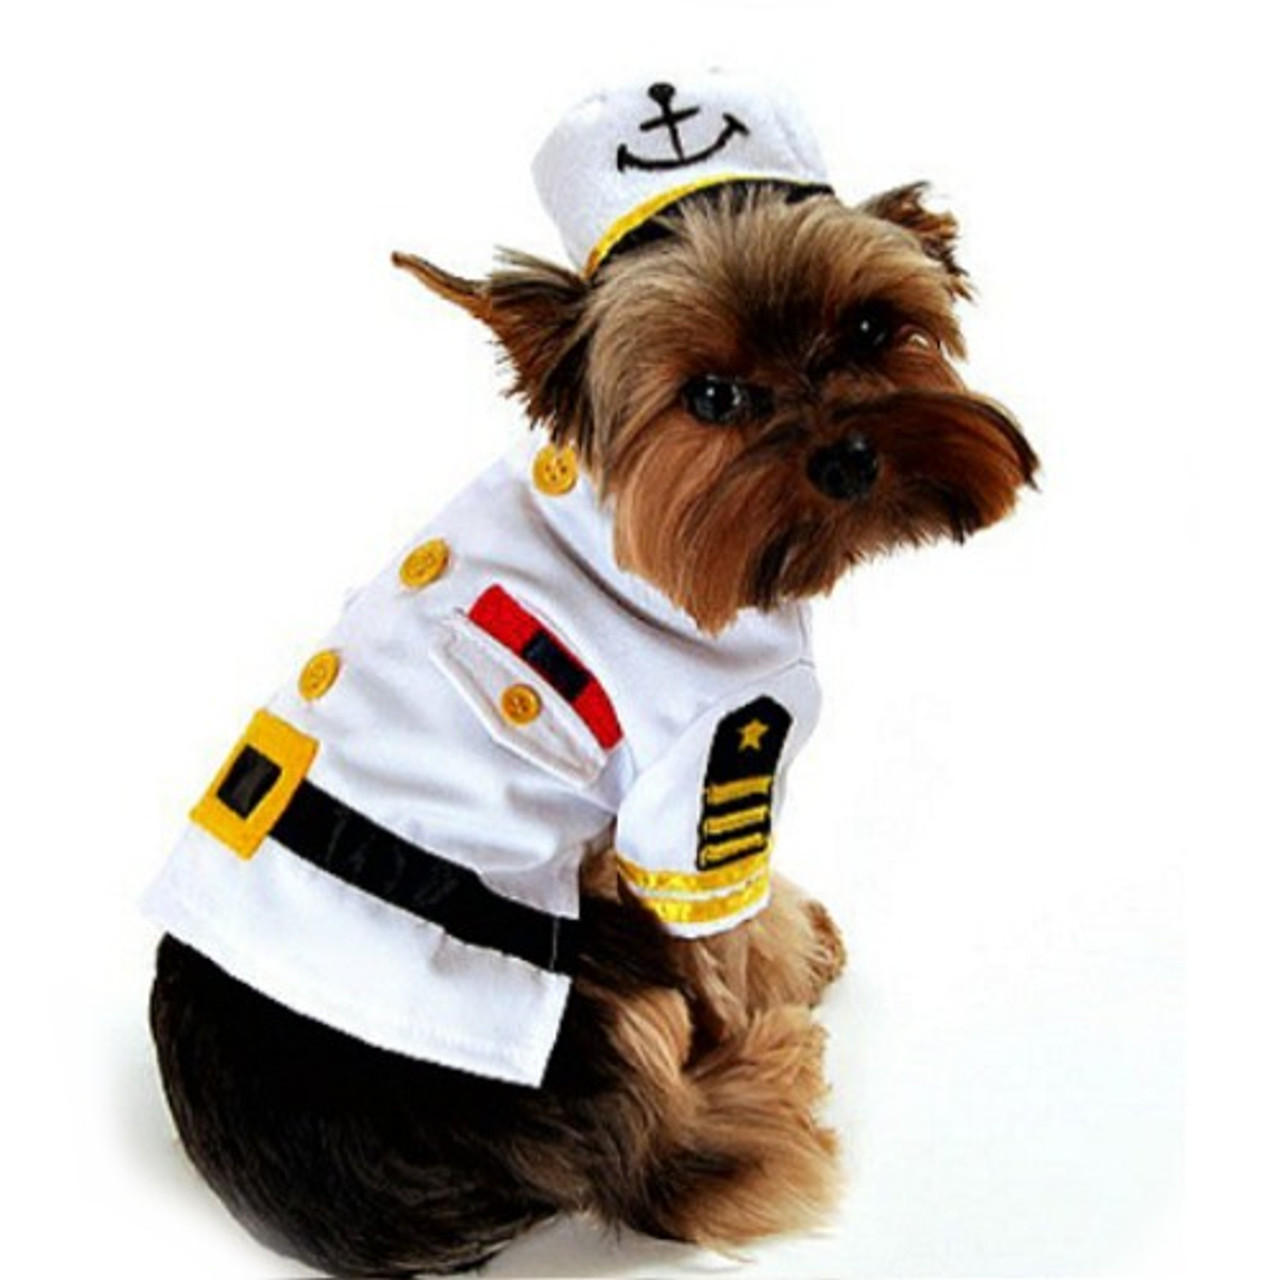 Sea Captain Dog Costume